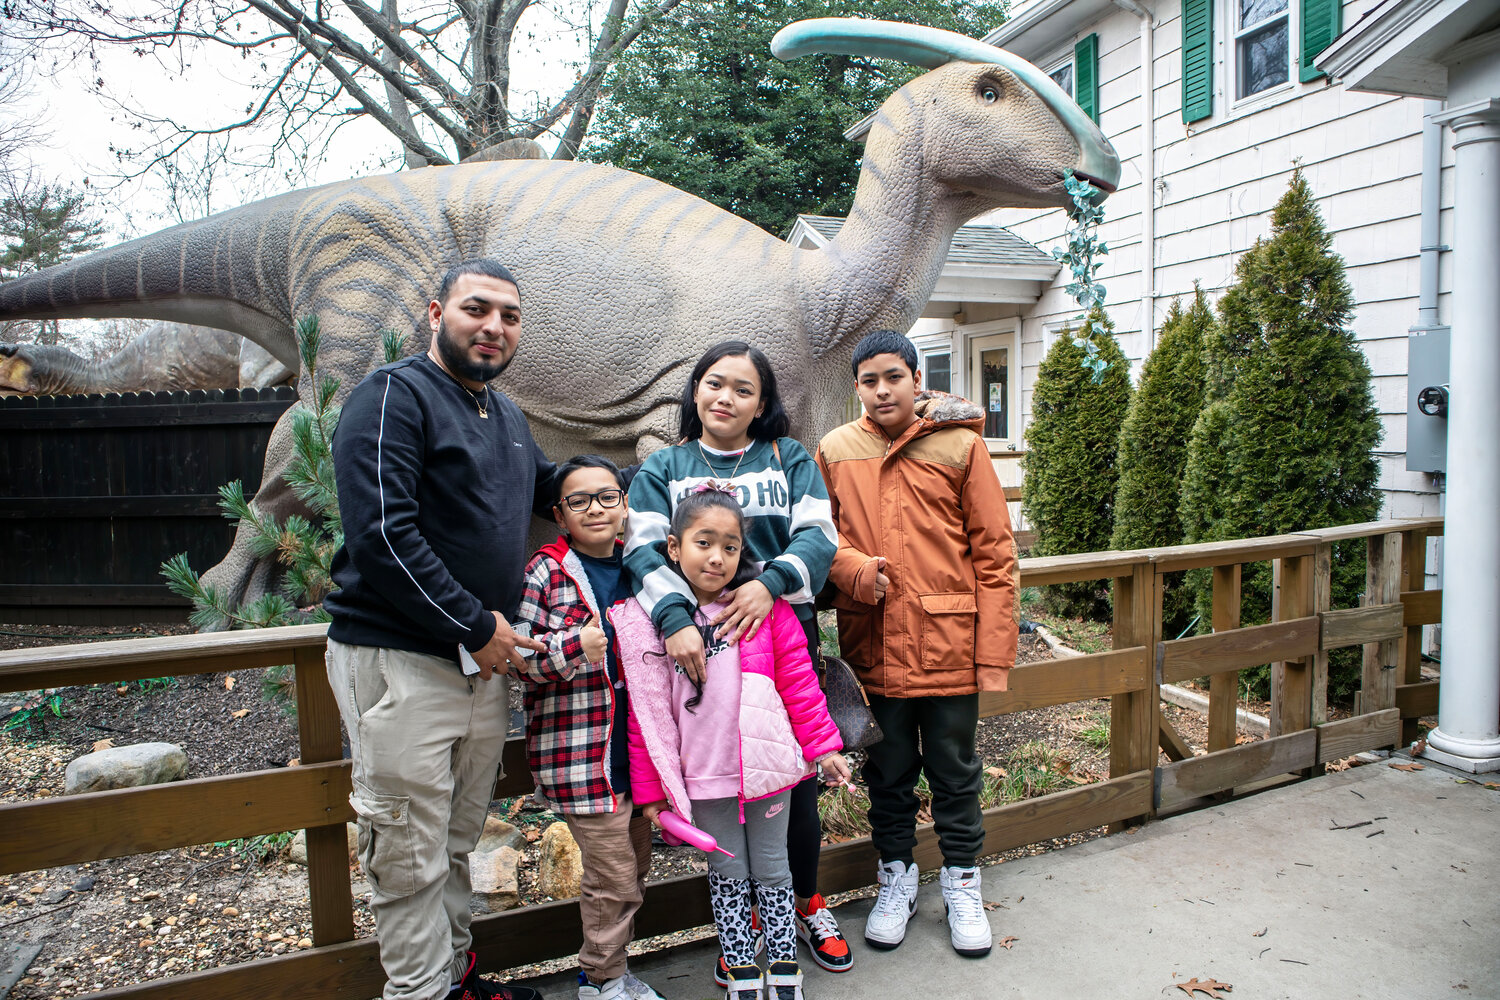 Posing with the Parasaurolophus are (L-R) Edwin Campos, Jordy Jovel (Age 8), Teresa Campos (Age 6), Hazel Jovel, Jostin Campos (Age 11).